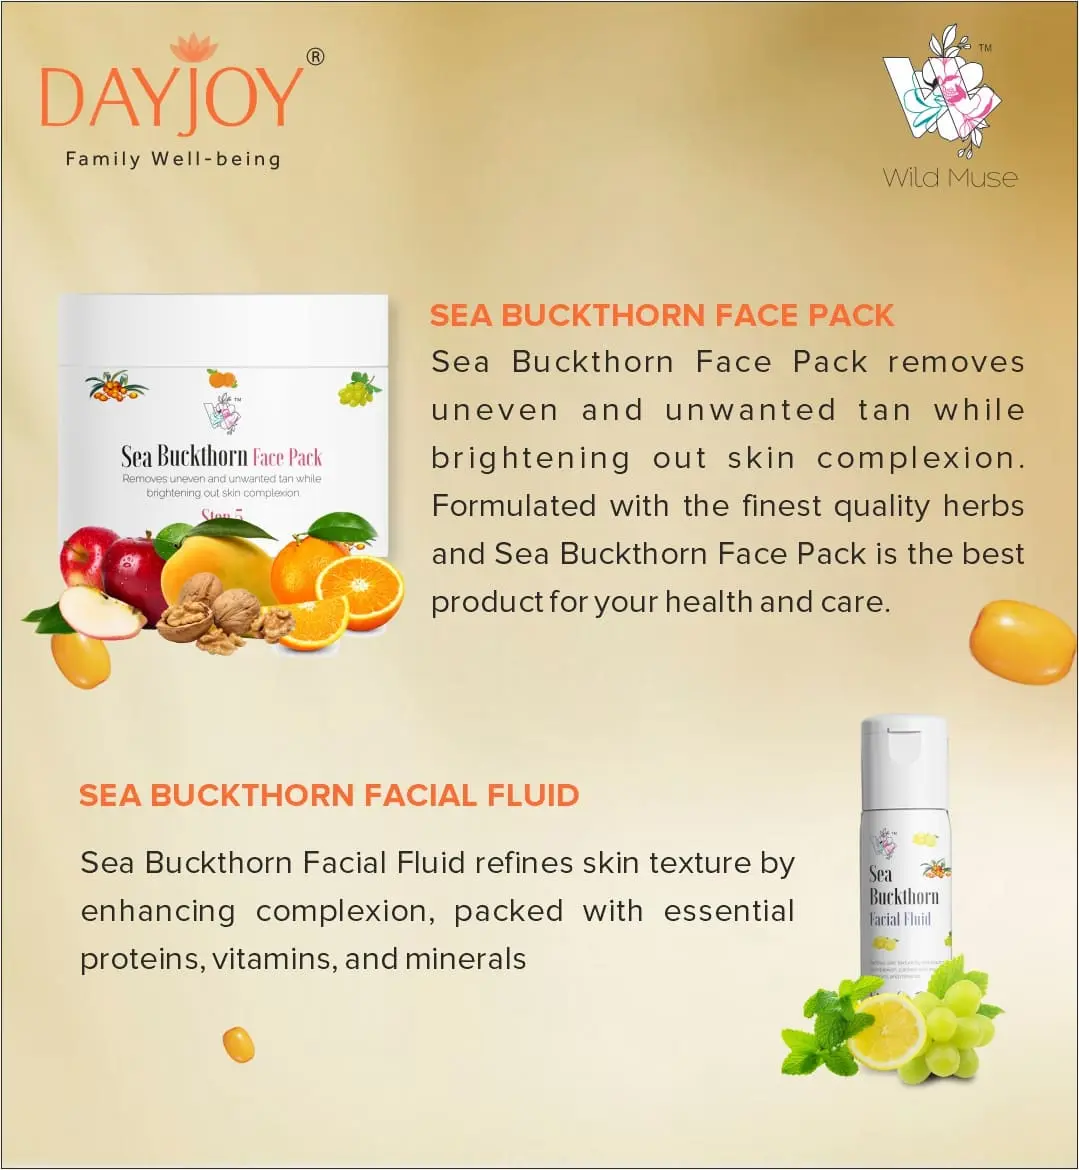 Seabuckthorn Facial Kit- best for glowing skin